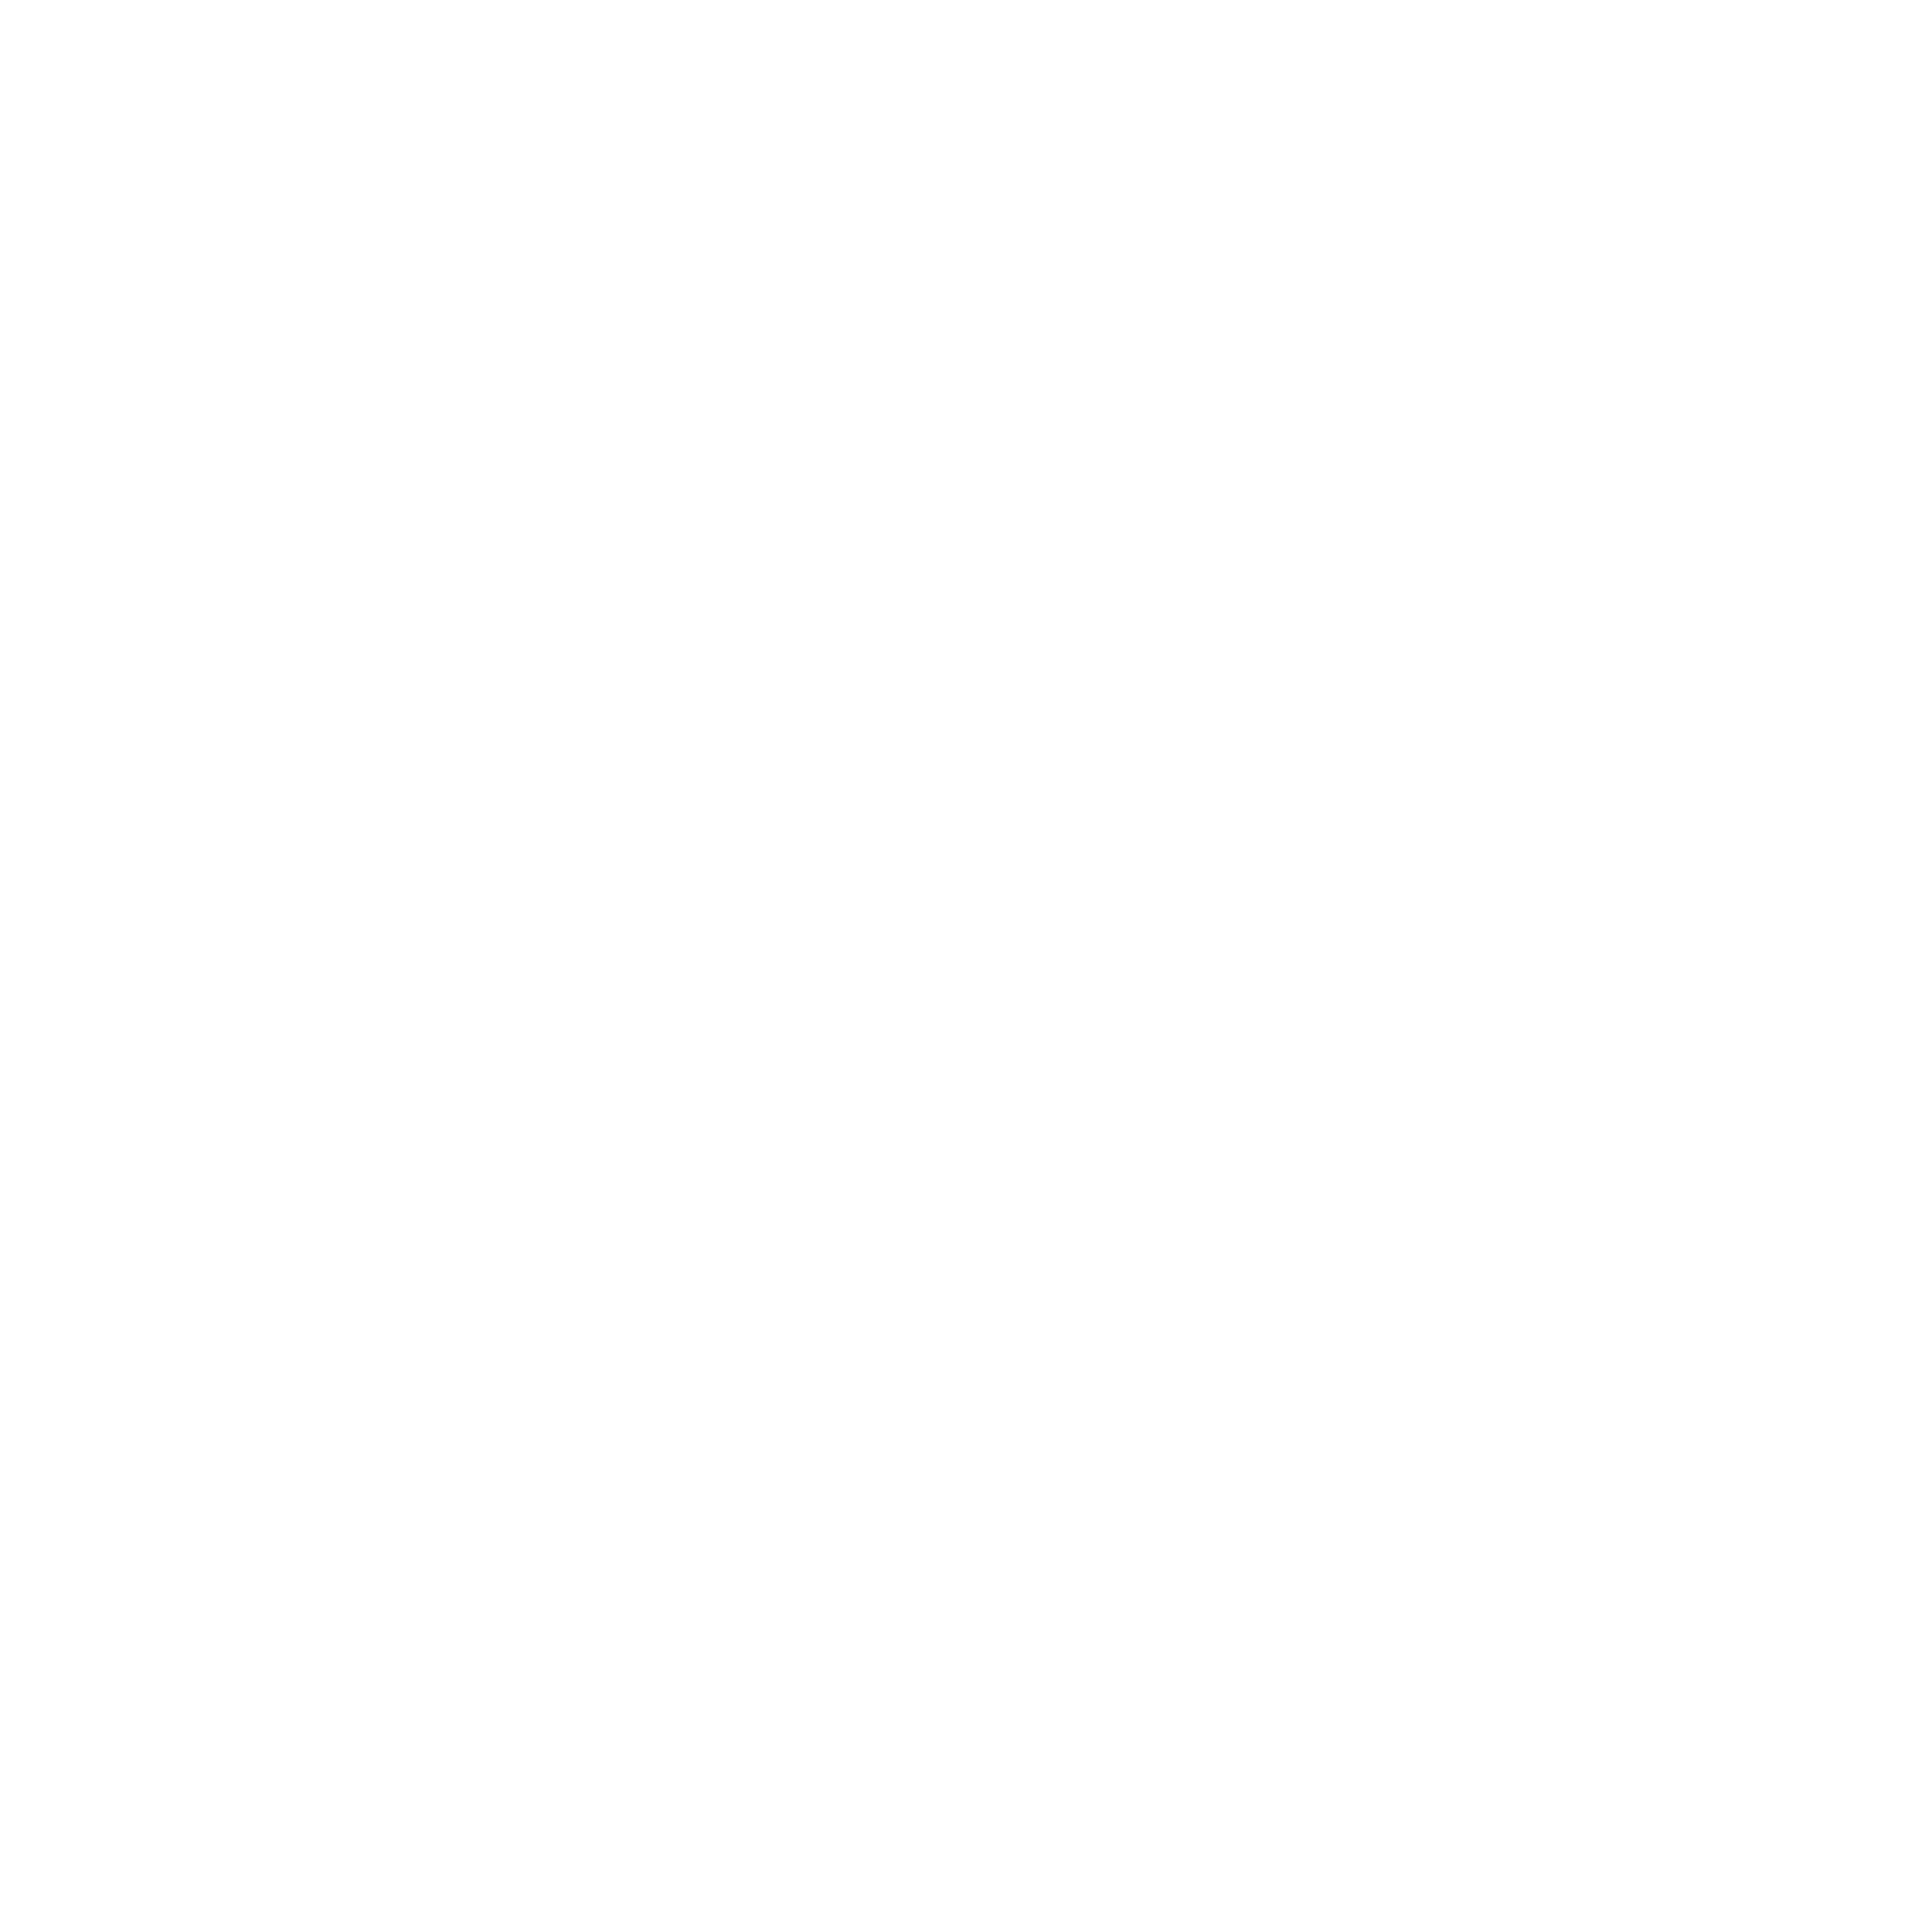 Joburg Logos for Web 2022 KF names sq Rachel Siya Kolisi Names